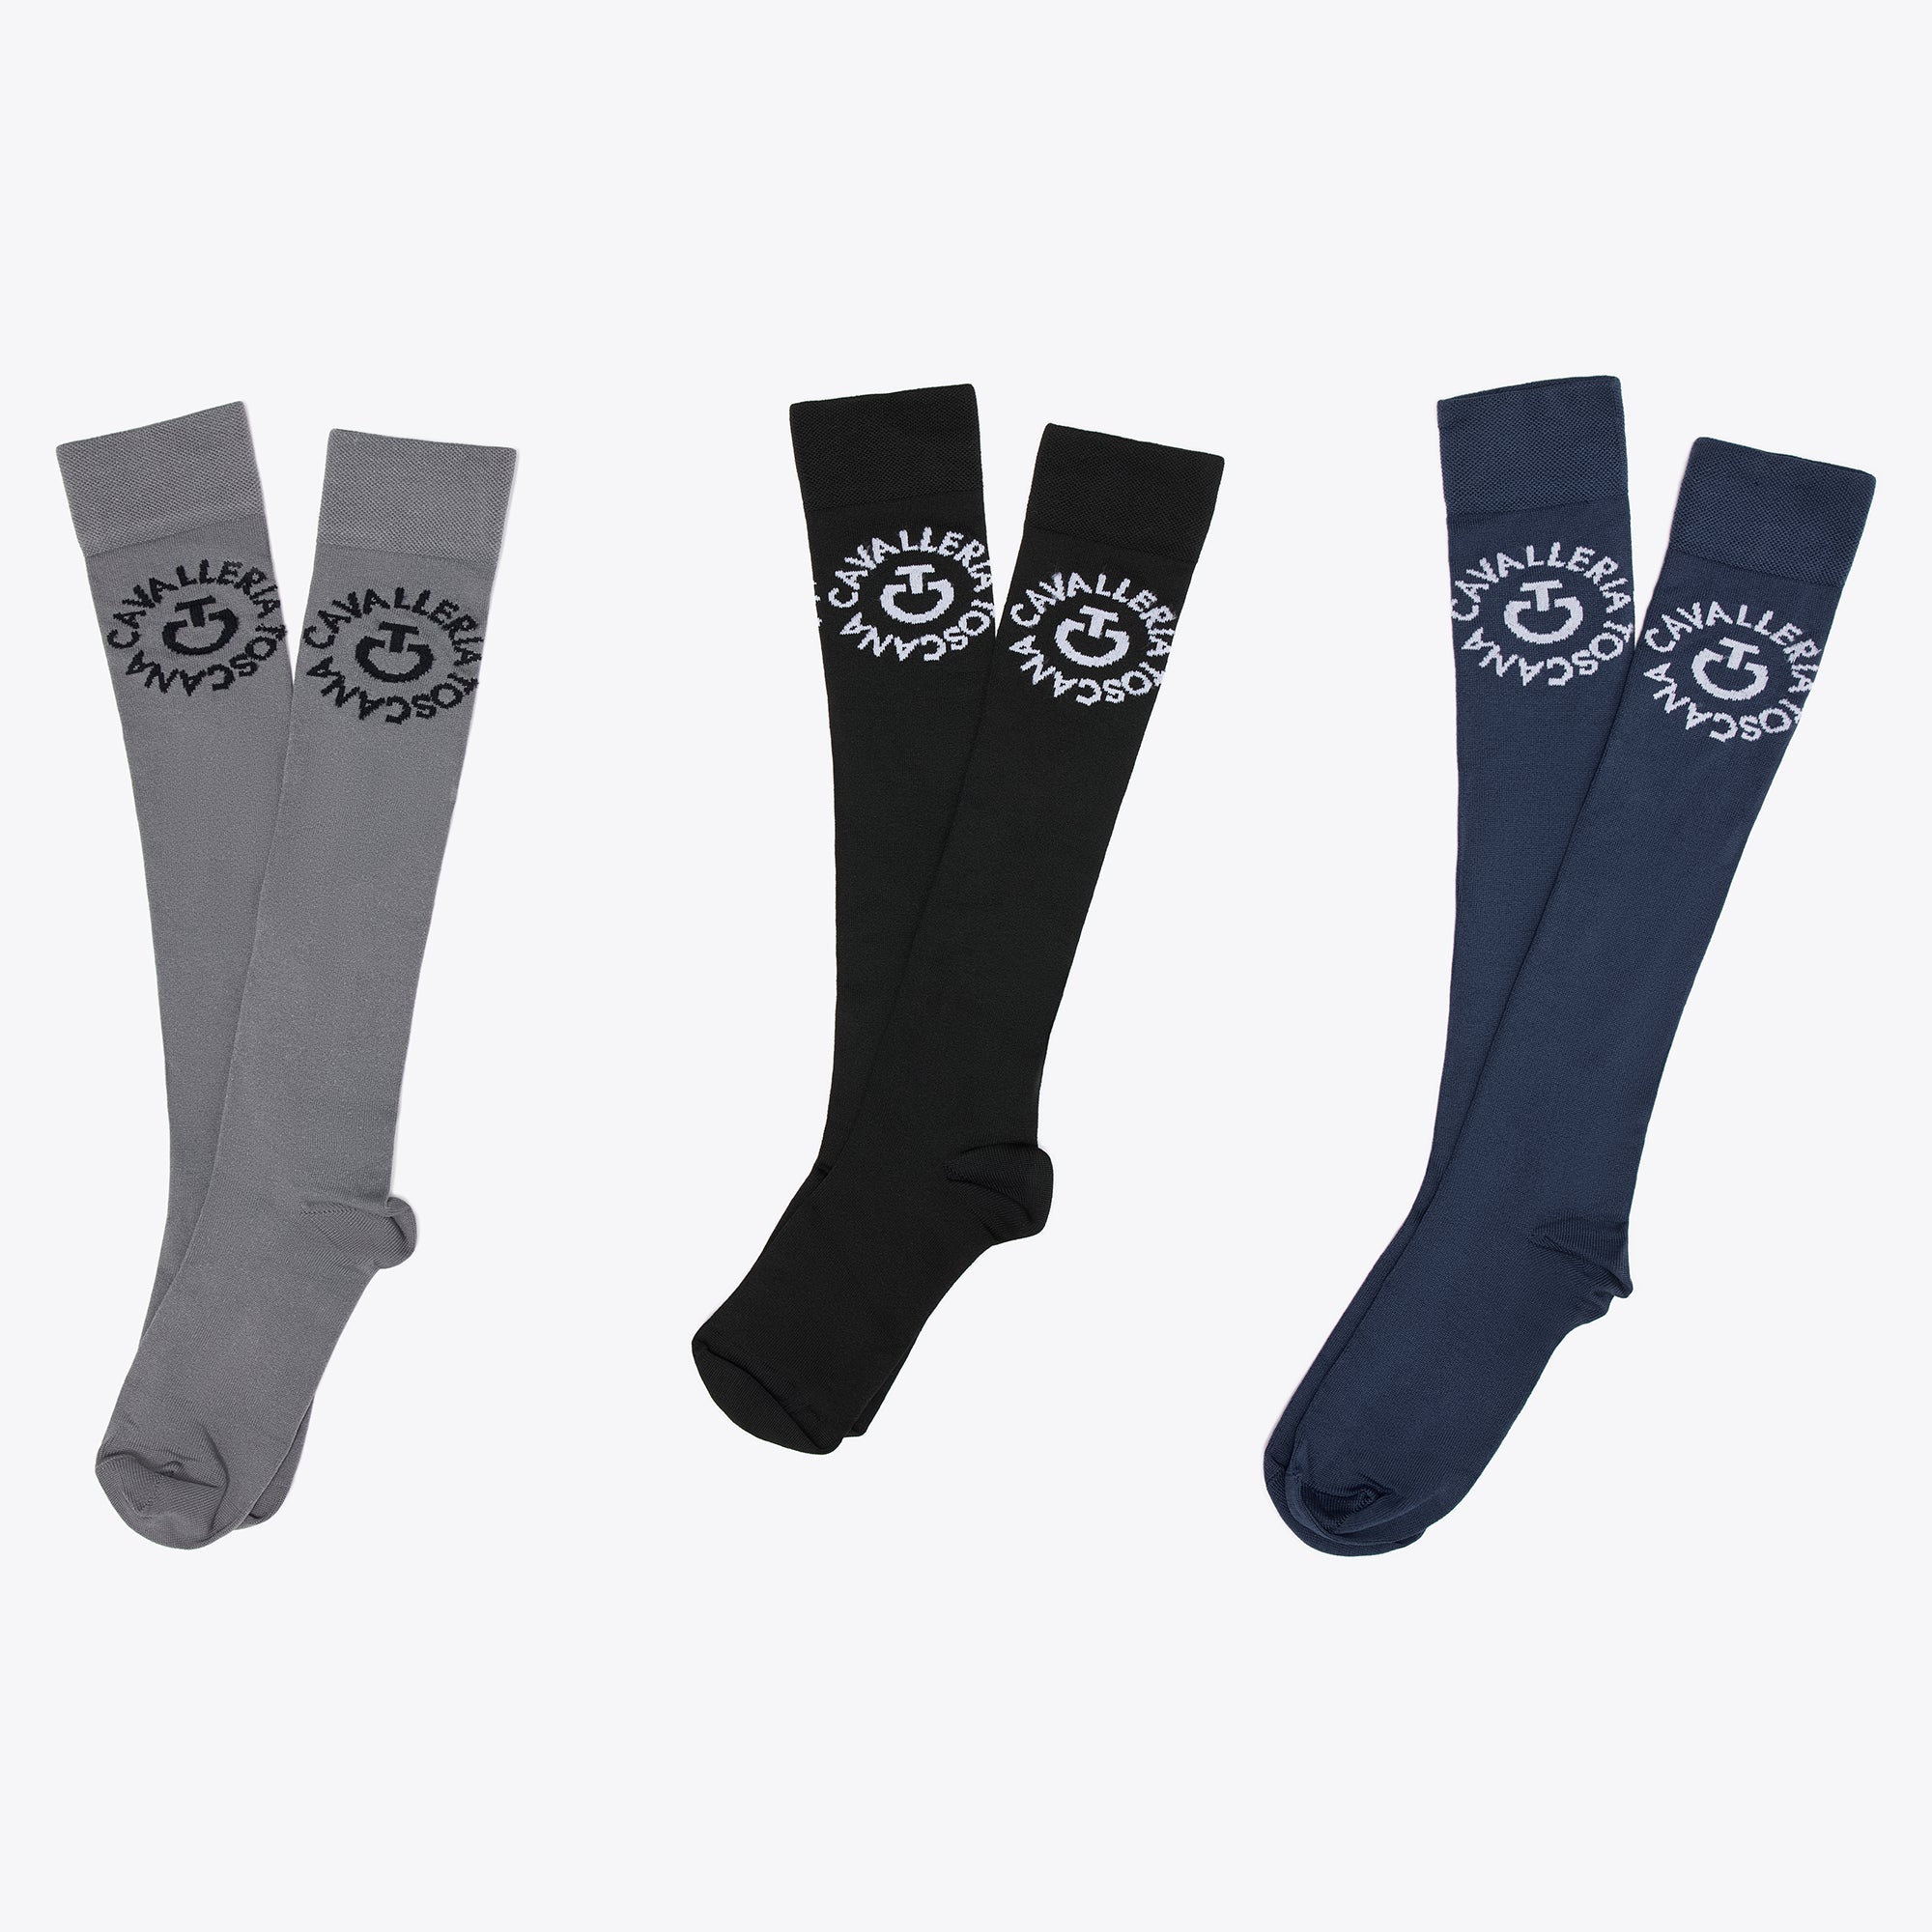 Ct Orbit Socks - 3 Pack